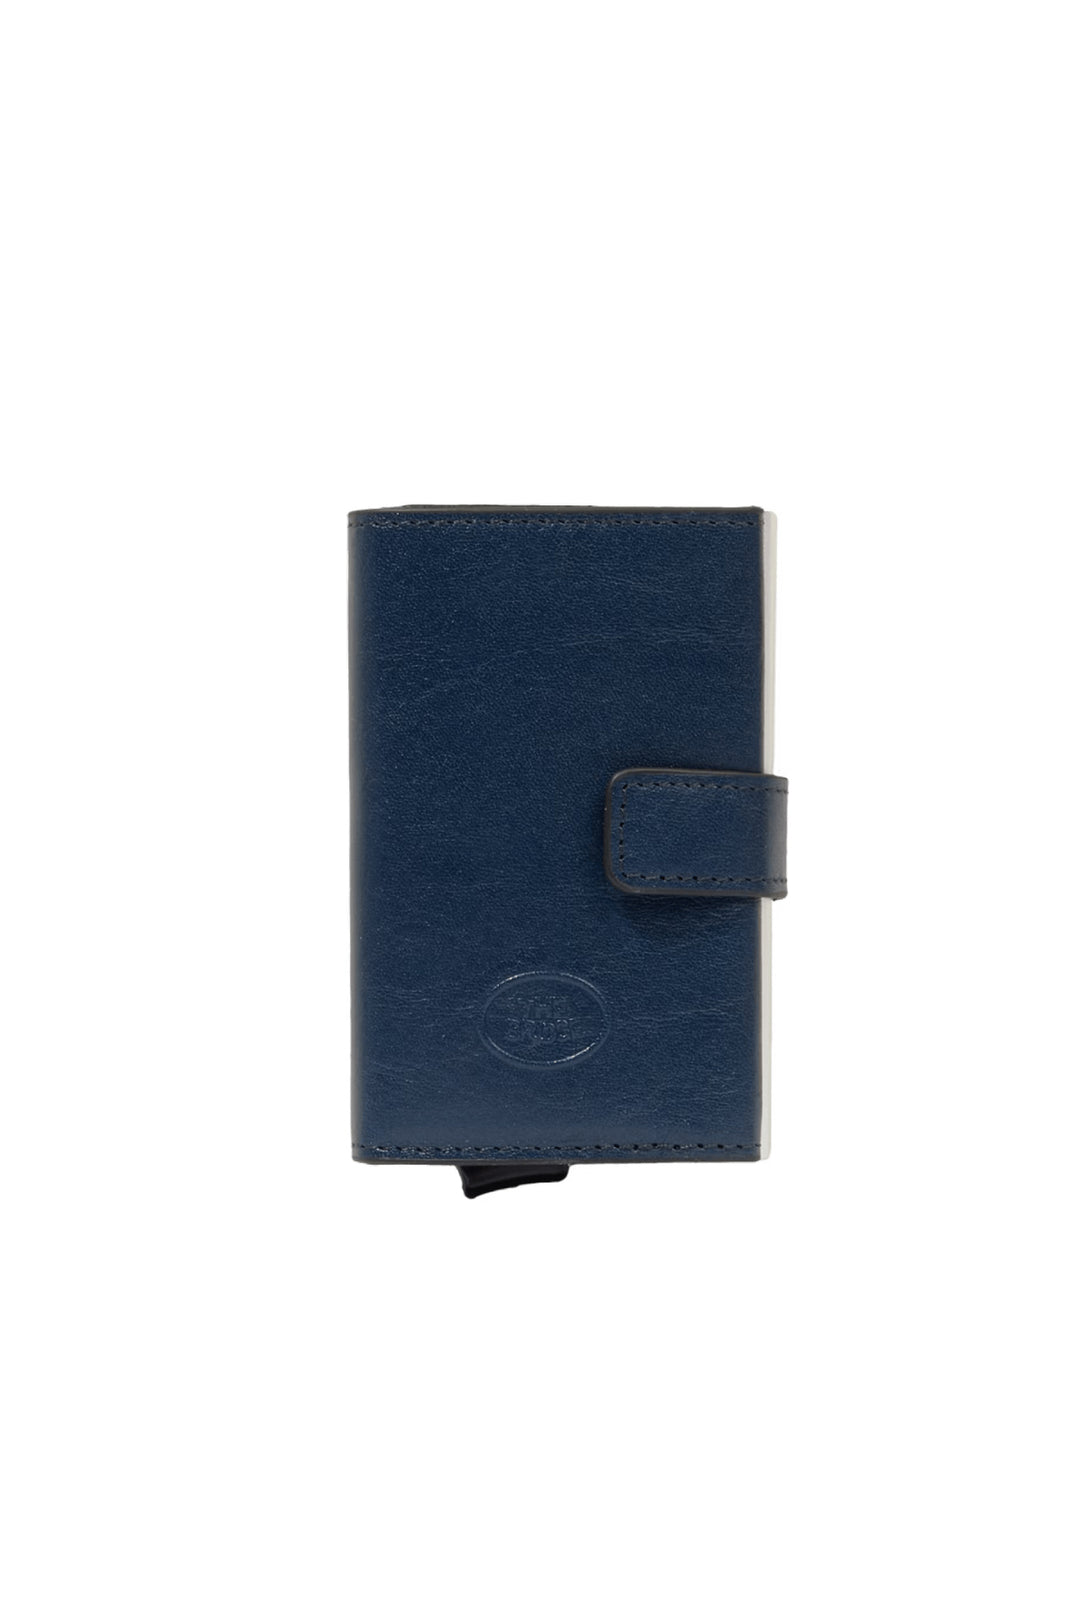 THE BRIDGE Porta carte di credito blu in pelle meccanismo pop-up - Mancinelli 1954